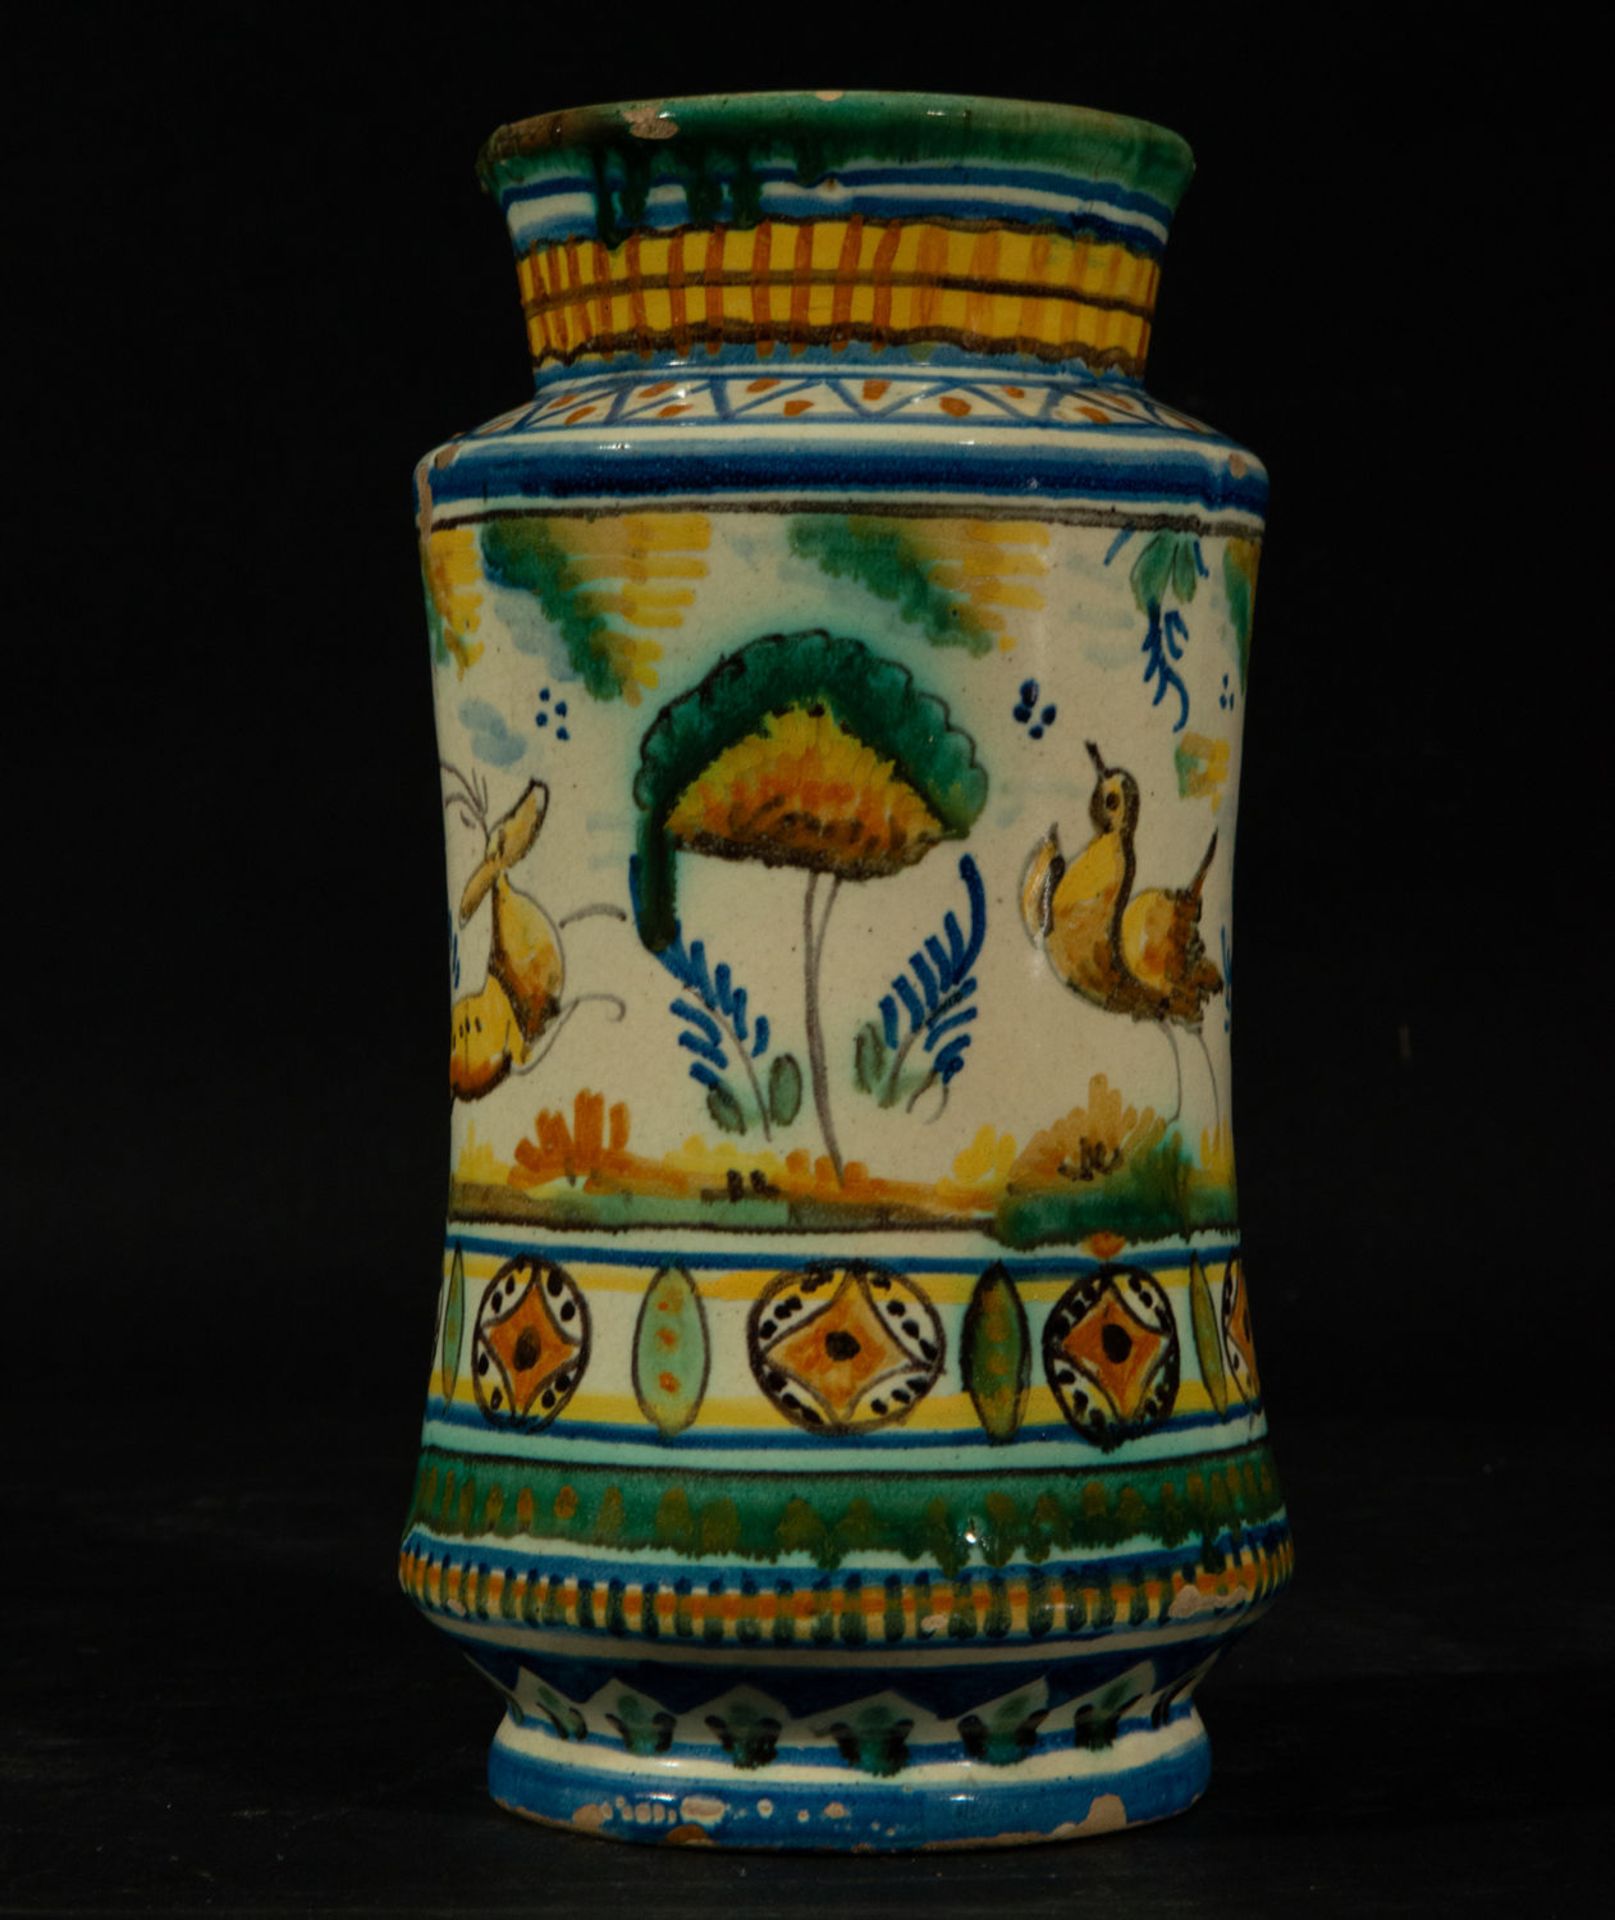 Ceramic Pharmacy Jar from Triana, Hare series, 18th - 19th century - Image 2 of 6